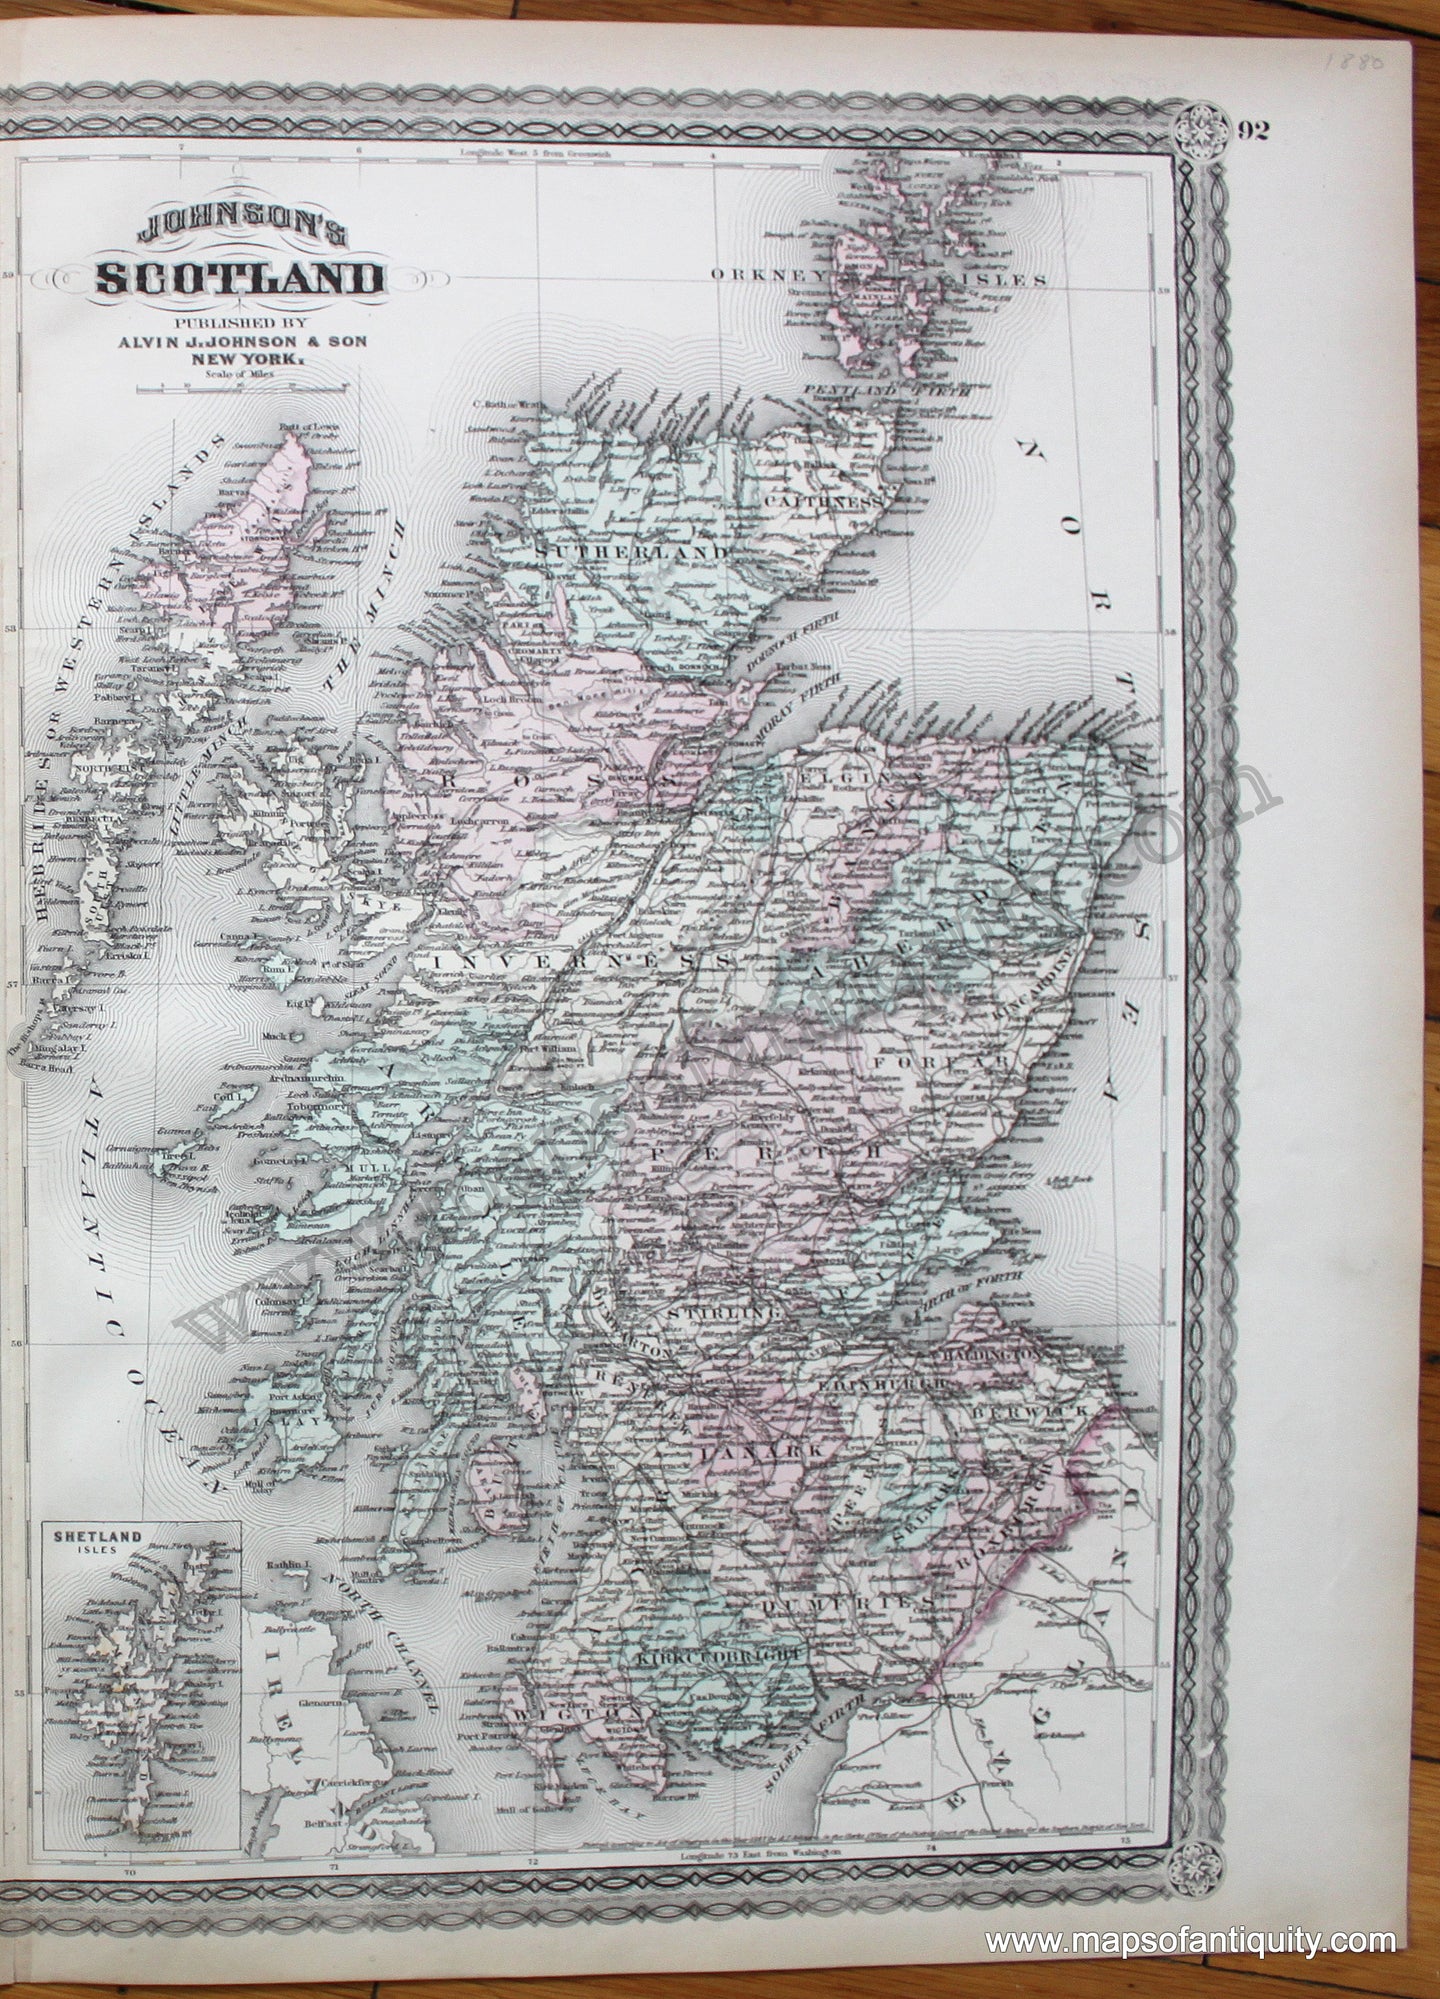 1880 - Johnson's Scotland